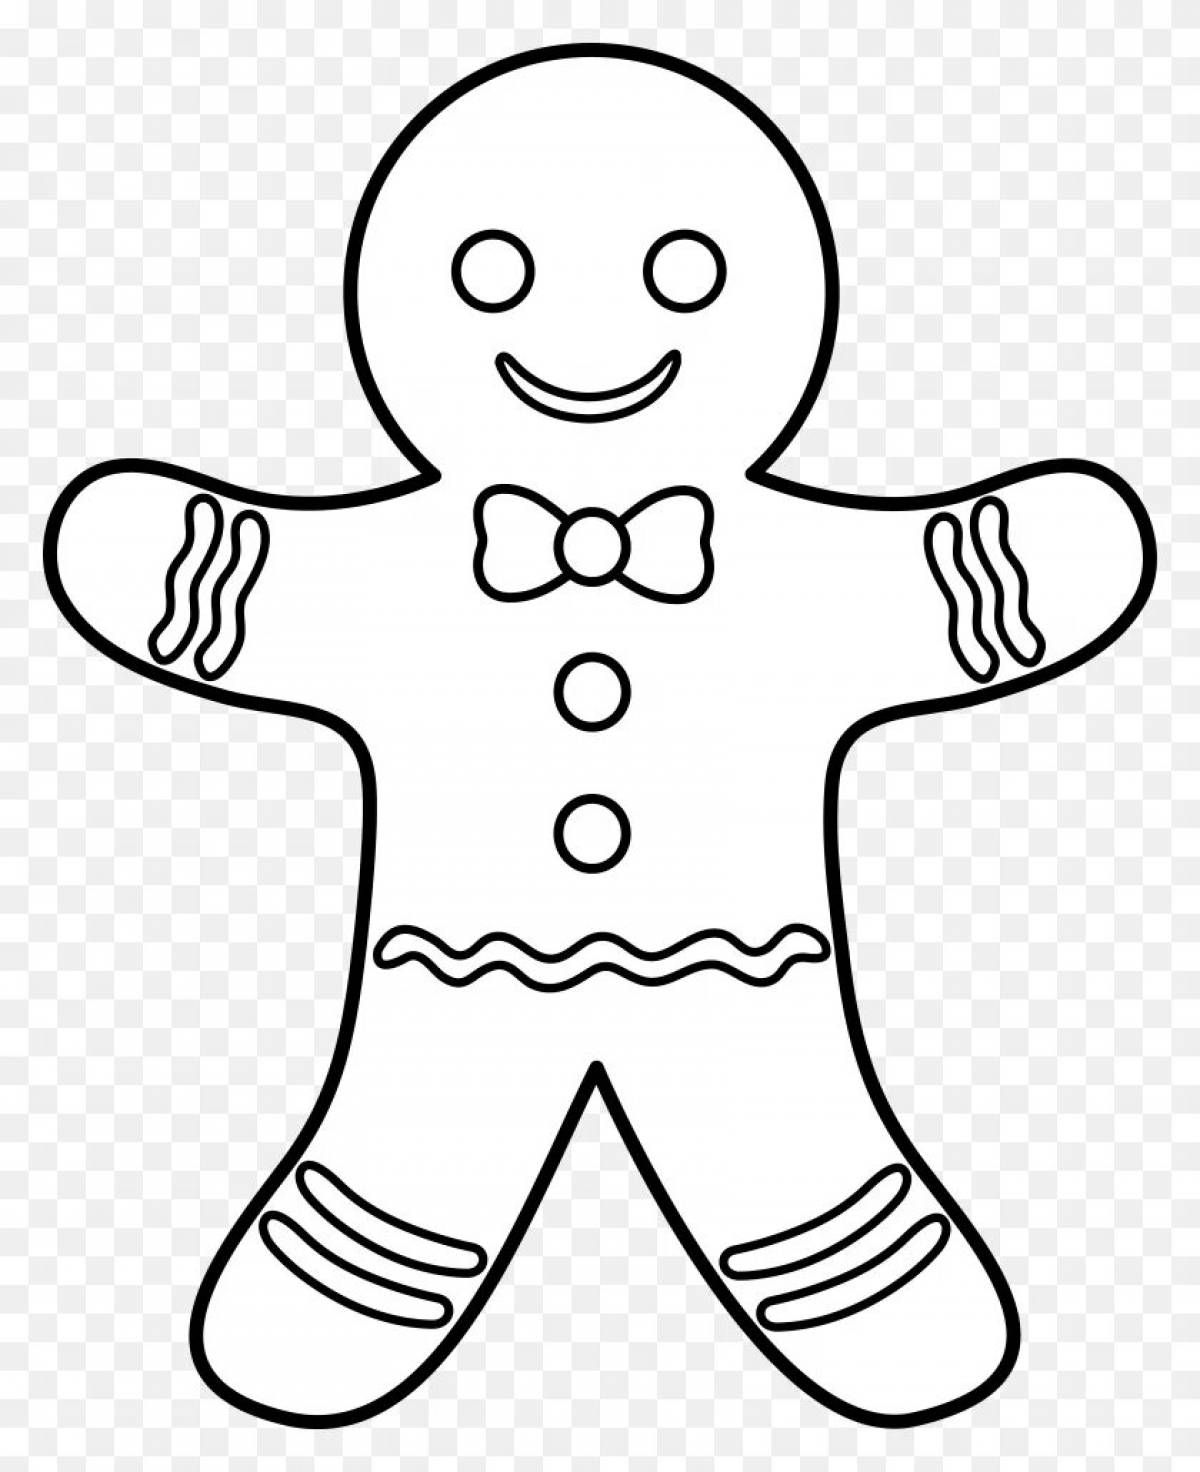 Gingerbread man #19